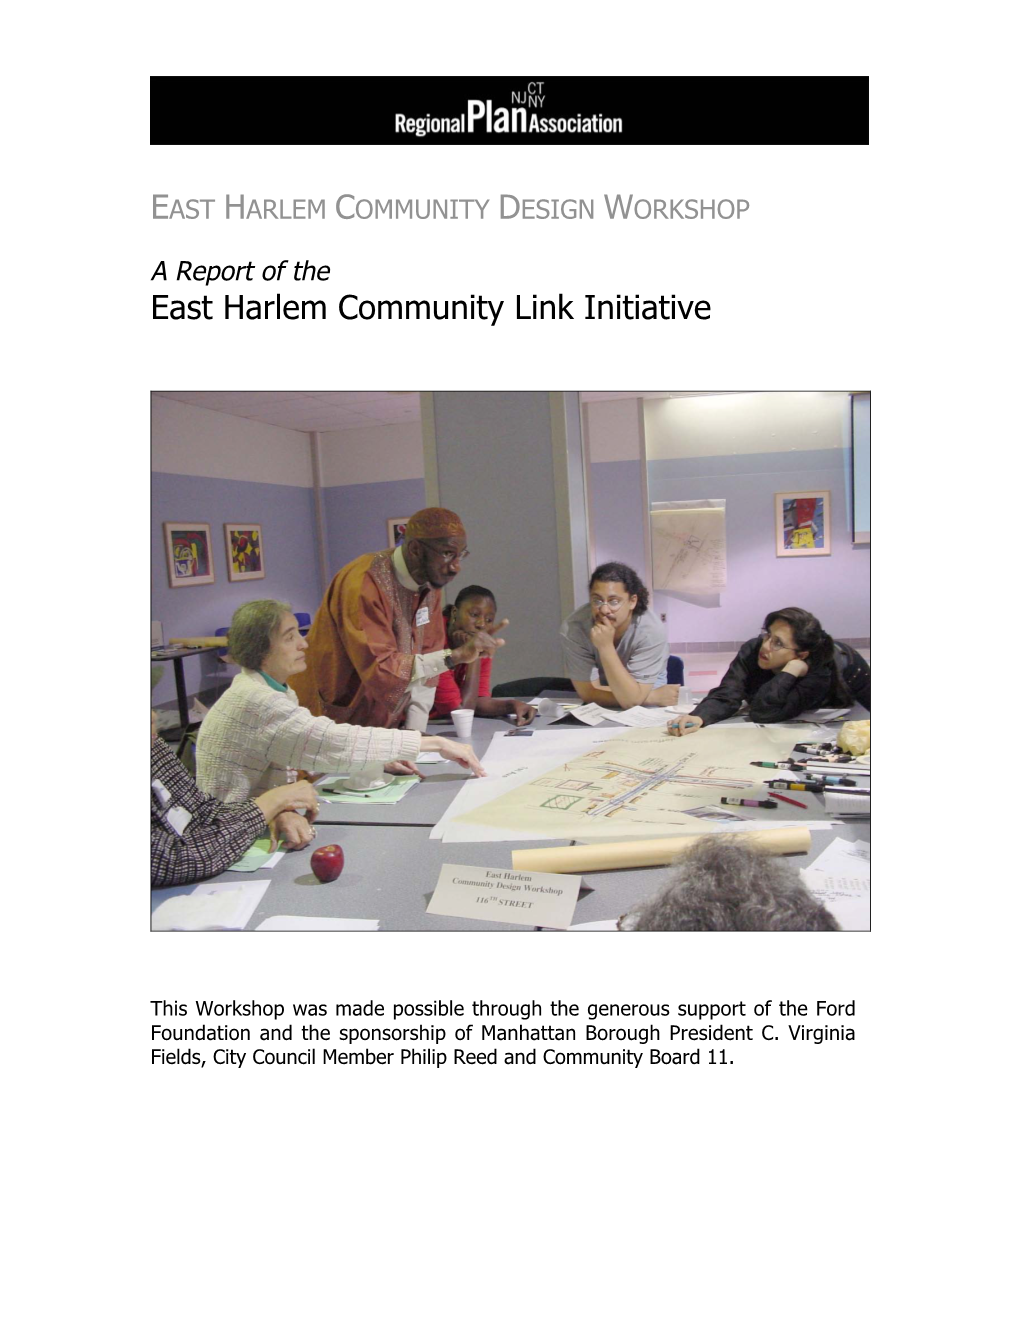 East Harlem Community Link Initiative